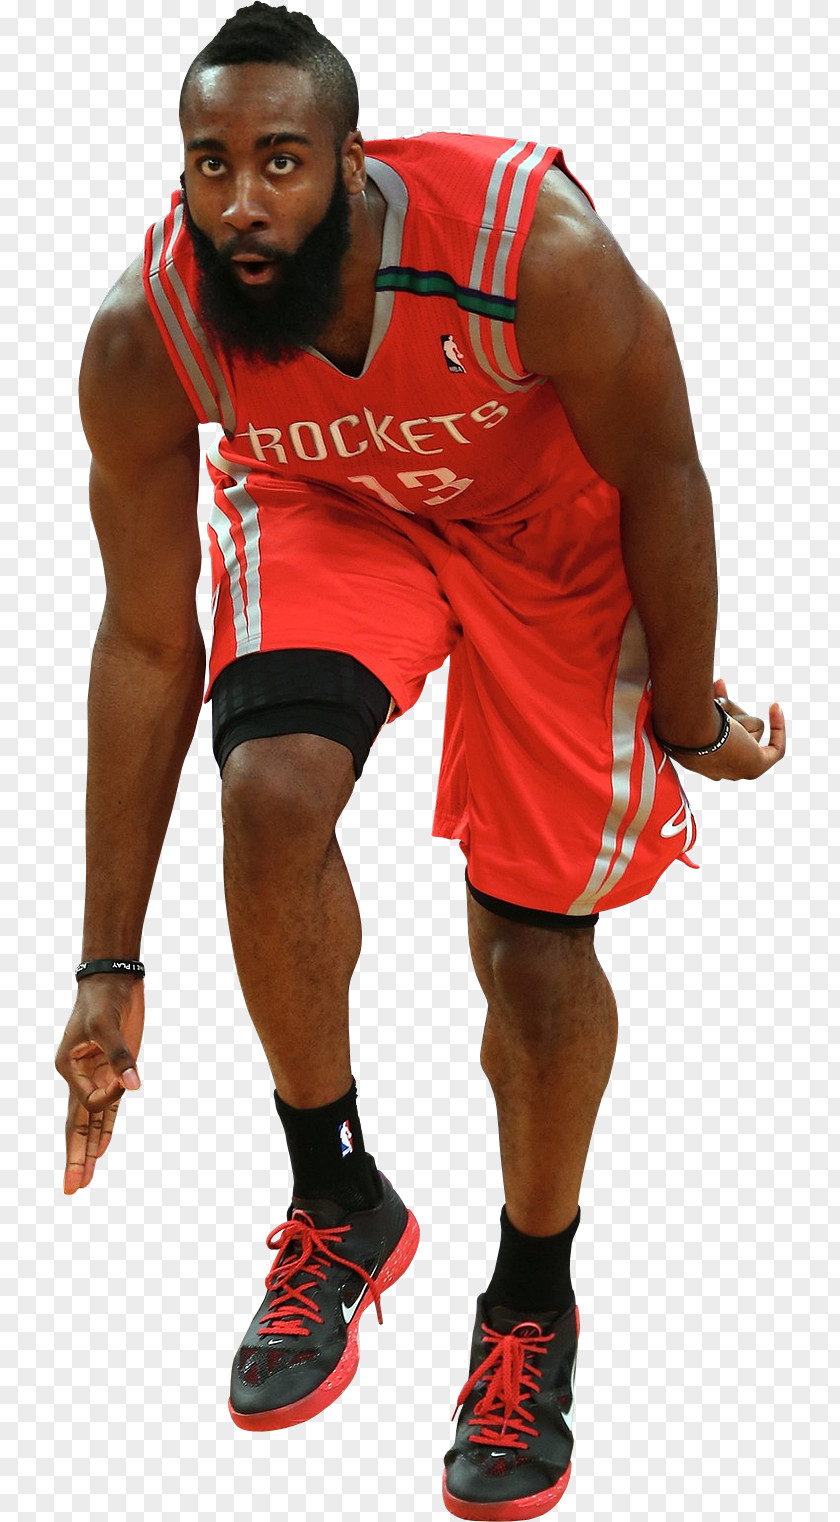 James Harden Houston Rockets Oklahoma City Thunder Basketball Player 2009 NBA Draft PNG